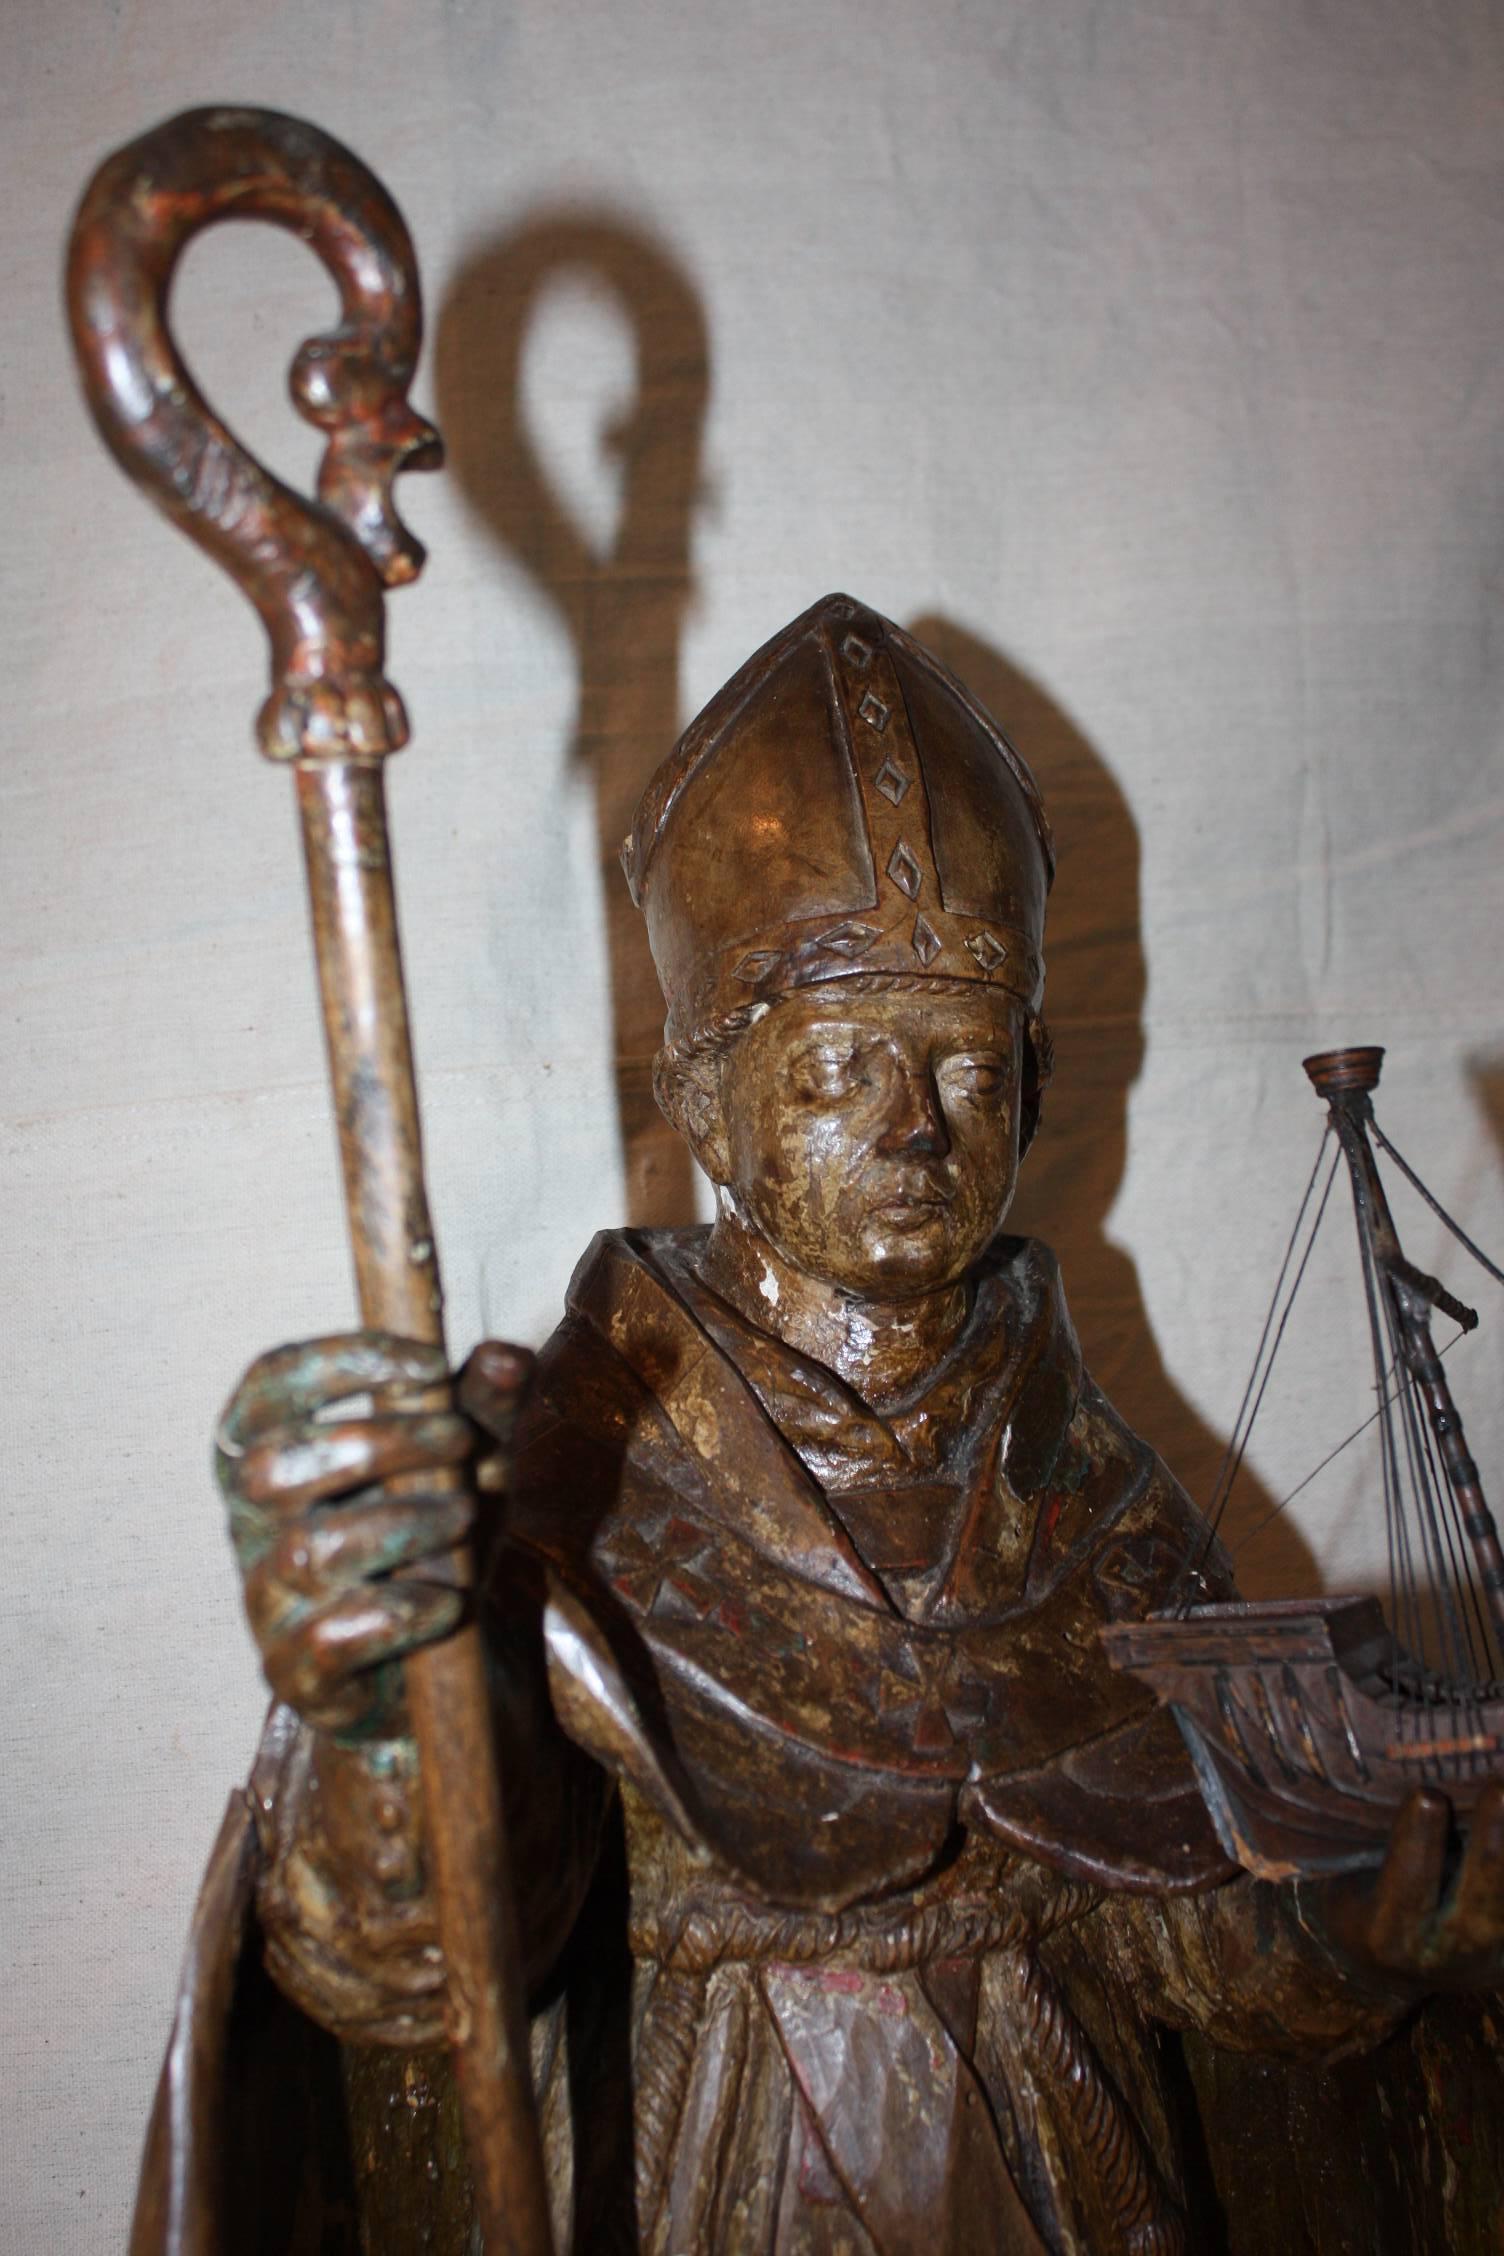 Italian 19th Century Hand-Carved Statue Representing Saint Brendan of Clonfert